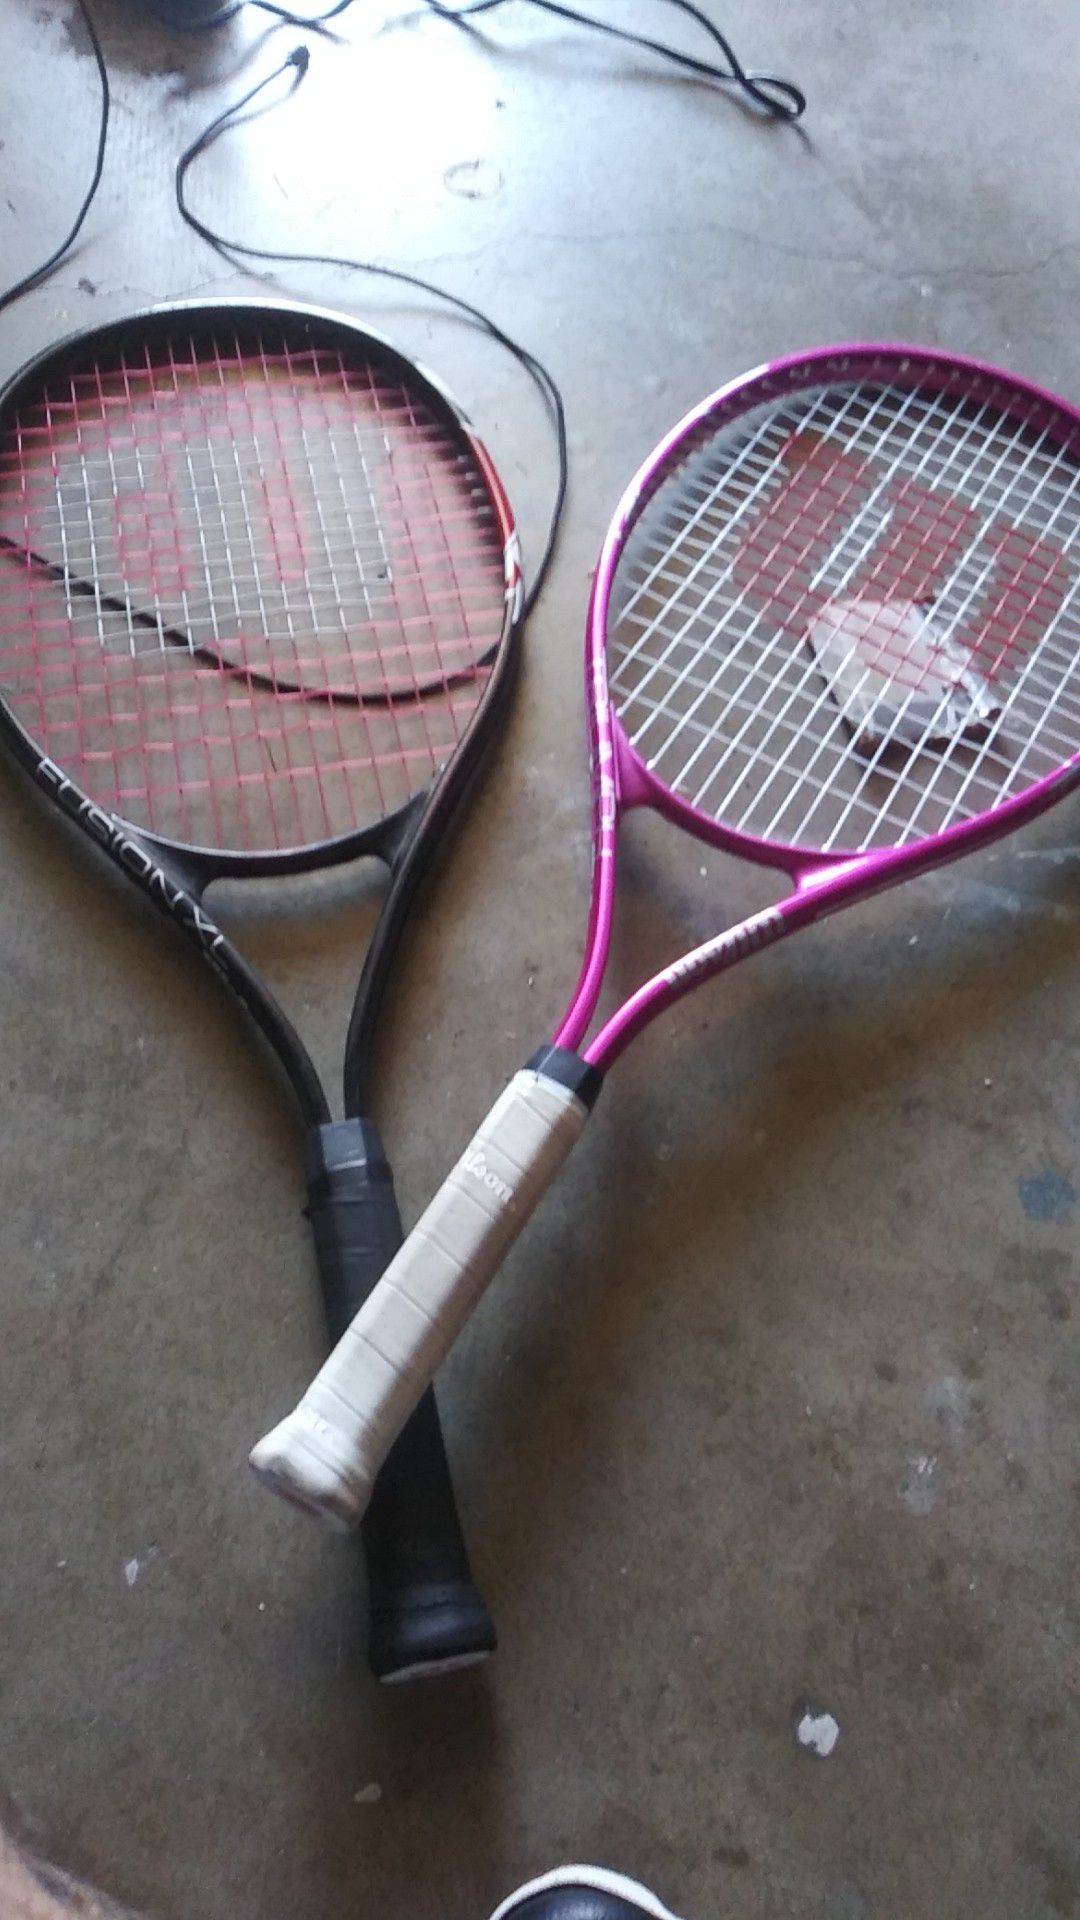 2 gently used Wilson tennis rackets